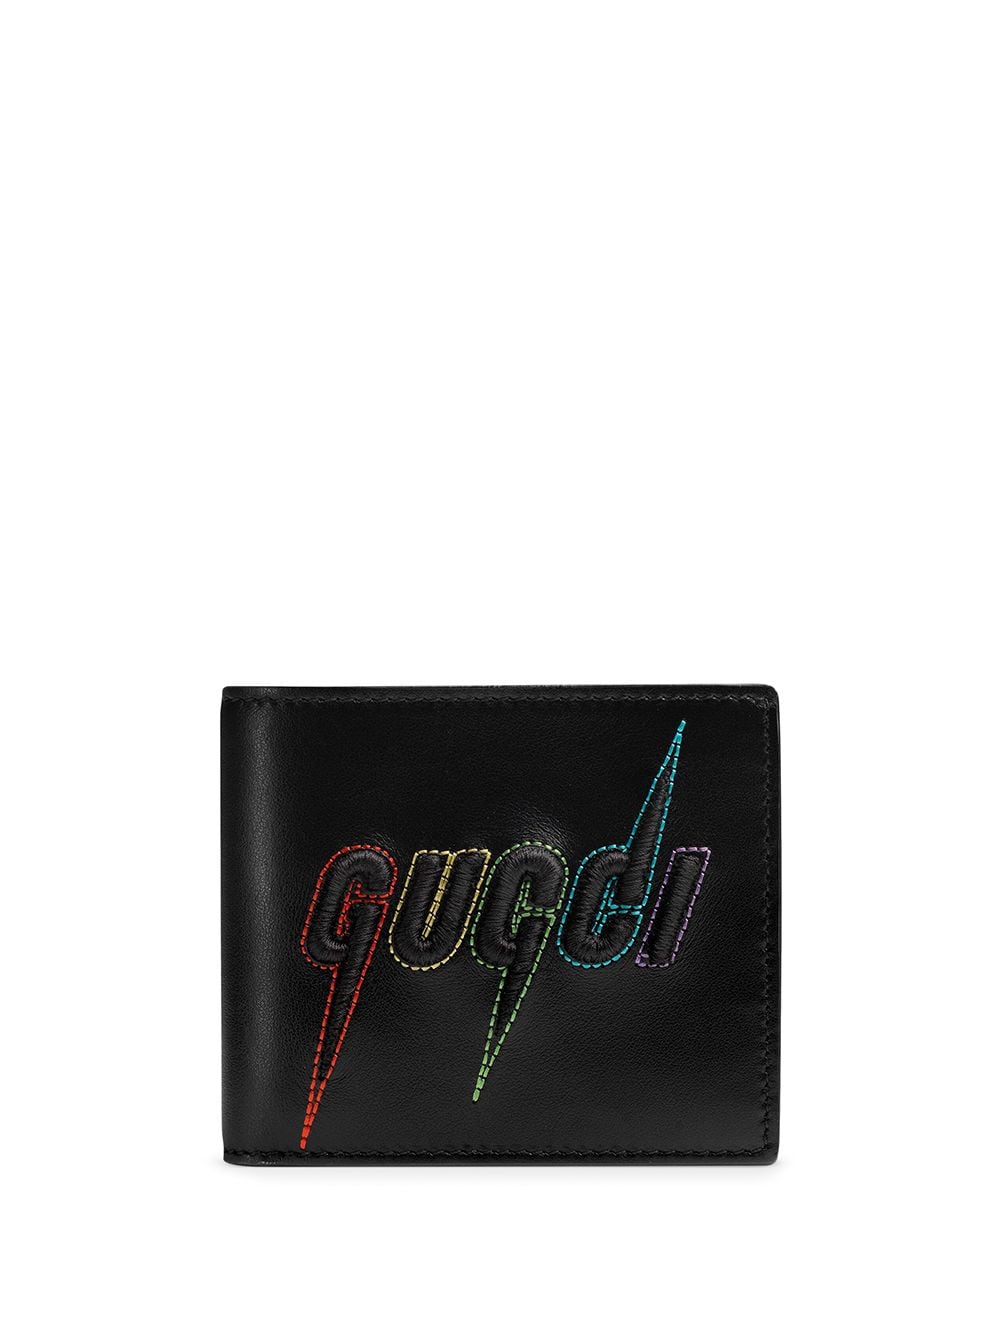 фото Gucci кошелек с вышивкой Gucci Blade